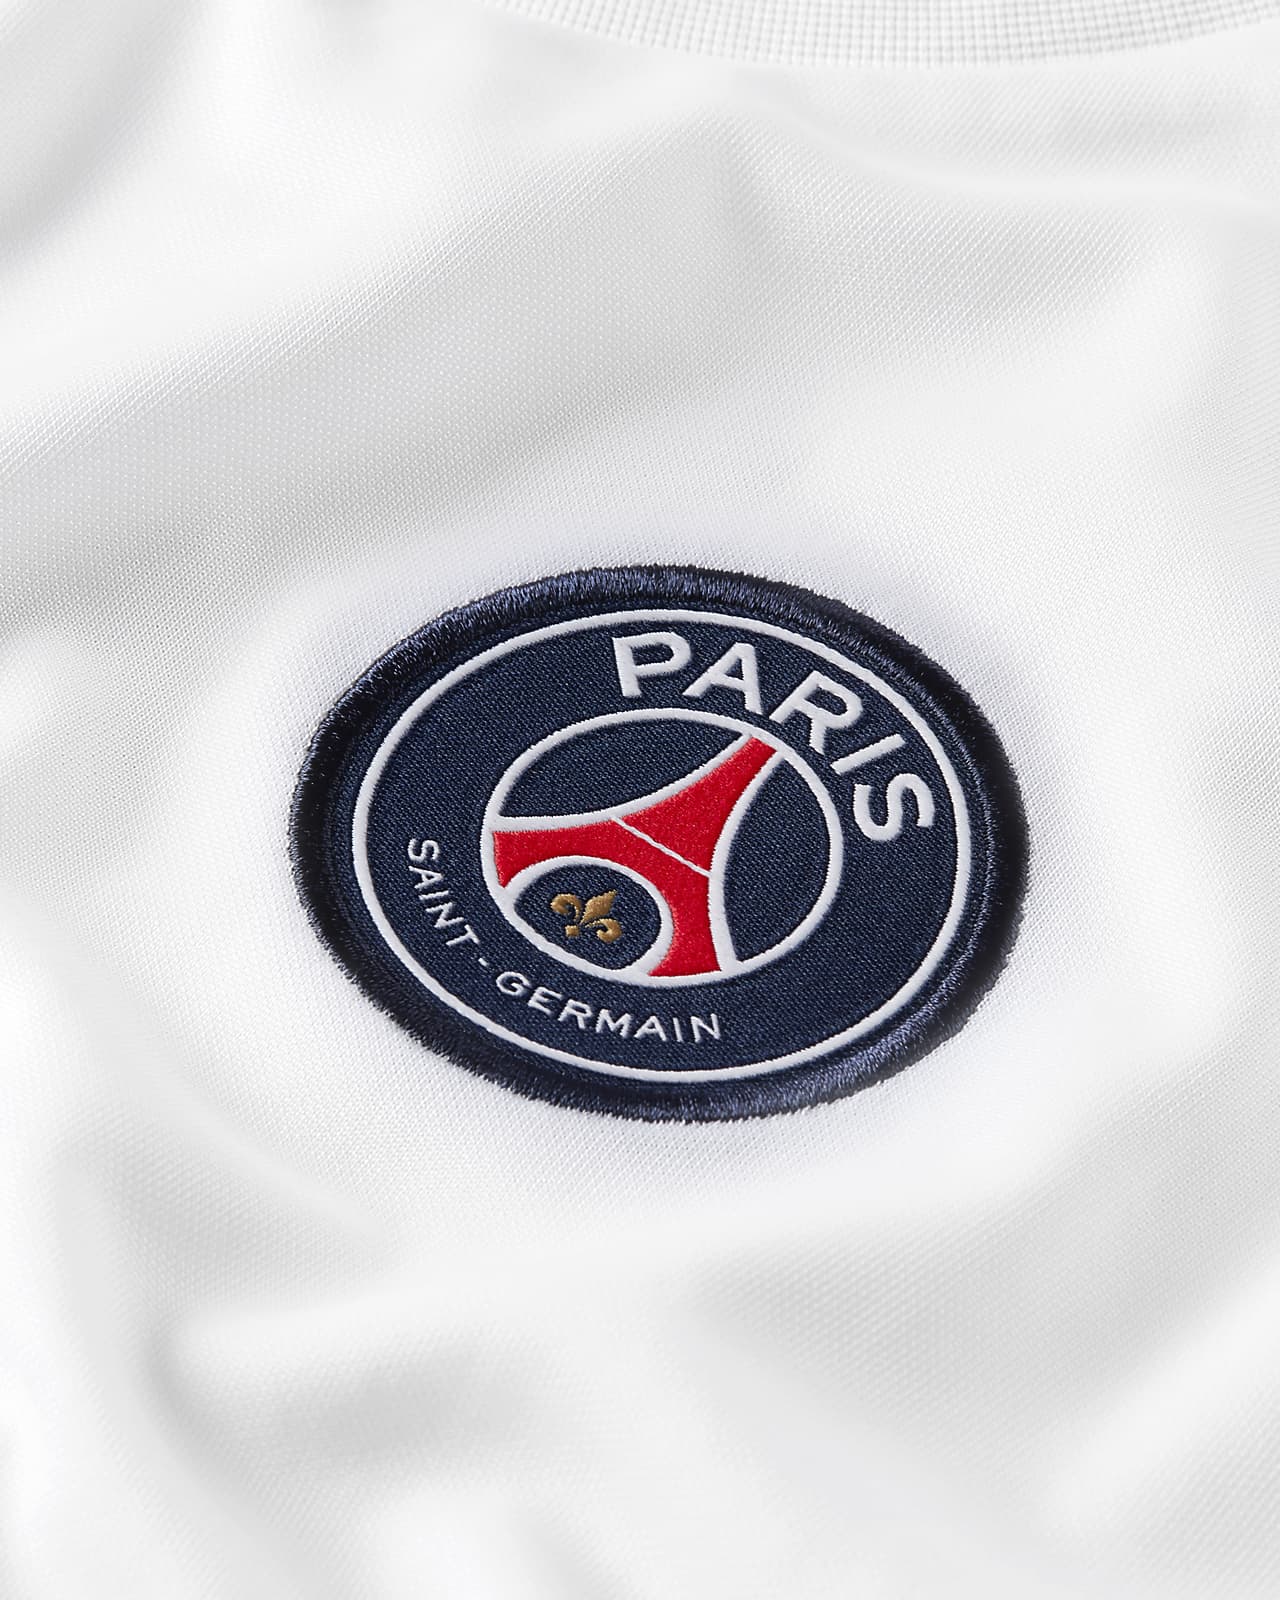 Nike公式 パリ サンジェルマン ストライク ホーム メンズ ショートスリーブ サッカートップ オンラインストア 通販サイト